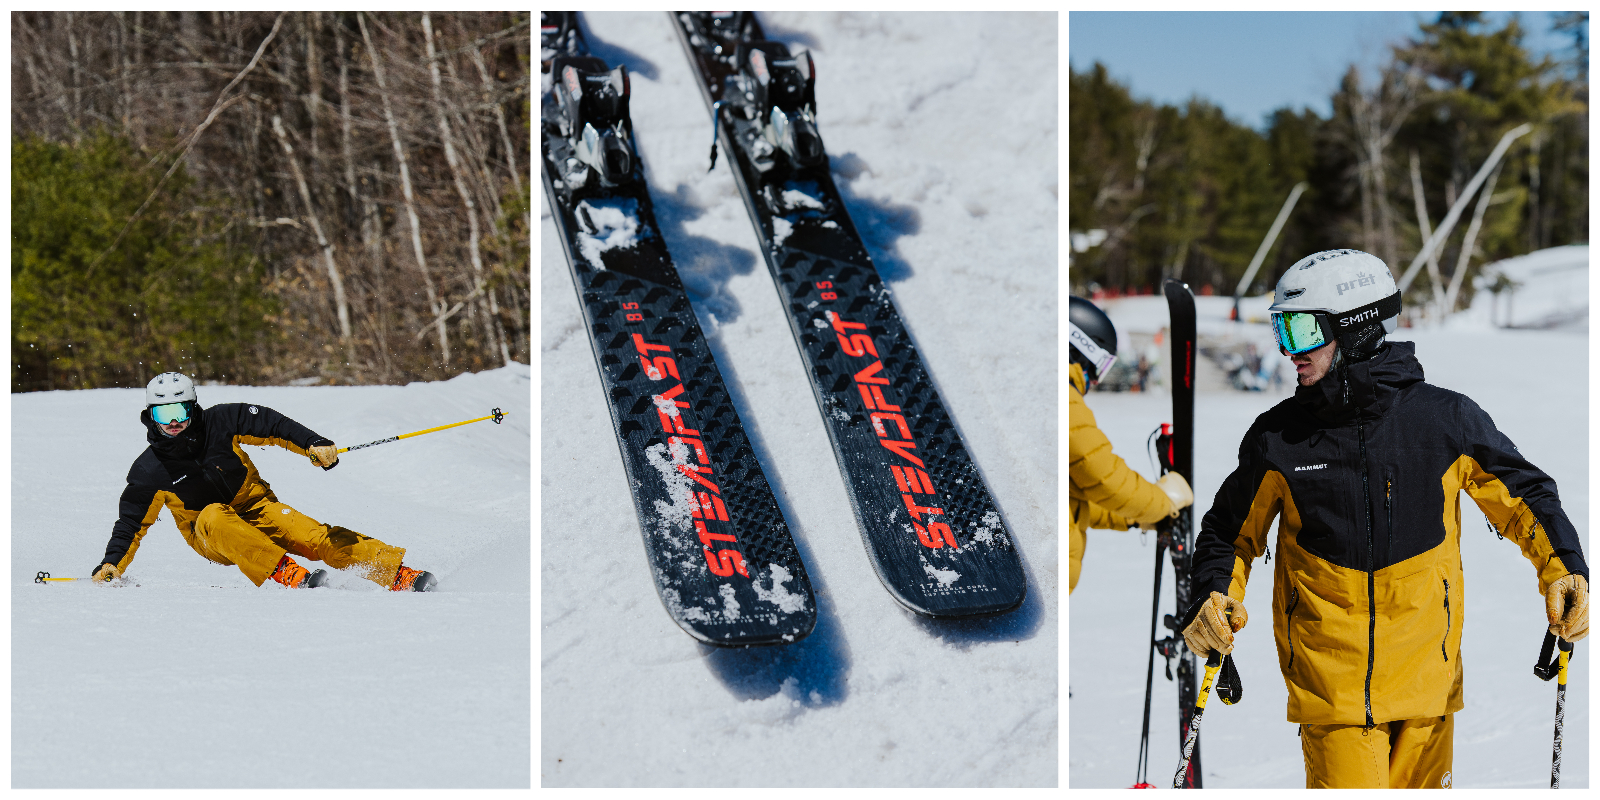 skiing, ski test, ski demo, Nordica, Nordica Steadfast, Nordica Doberman, snow, winter, Sunapee, Sunapee Mountain, New Hampshire, TSM, The Ski Monster